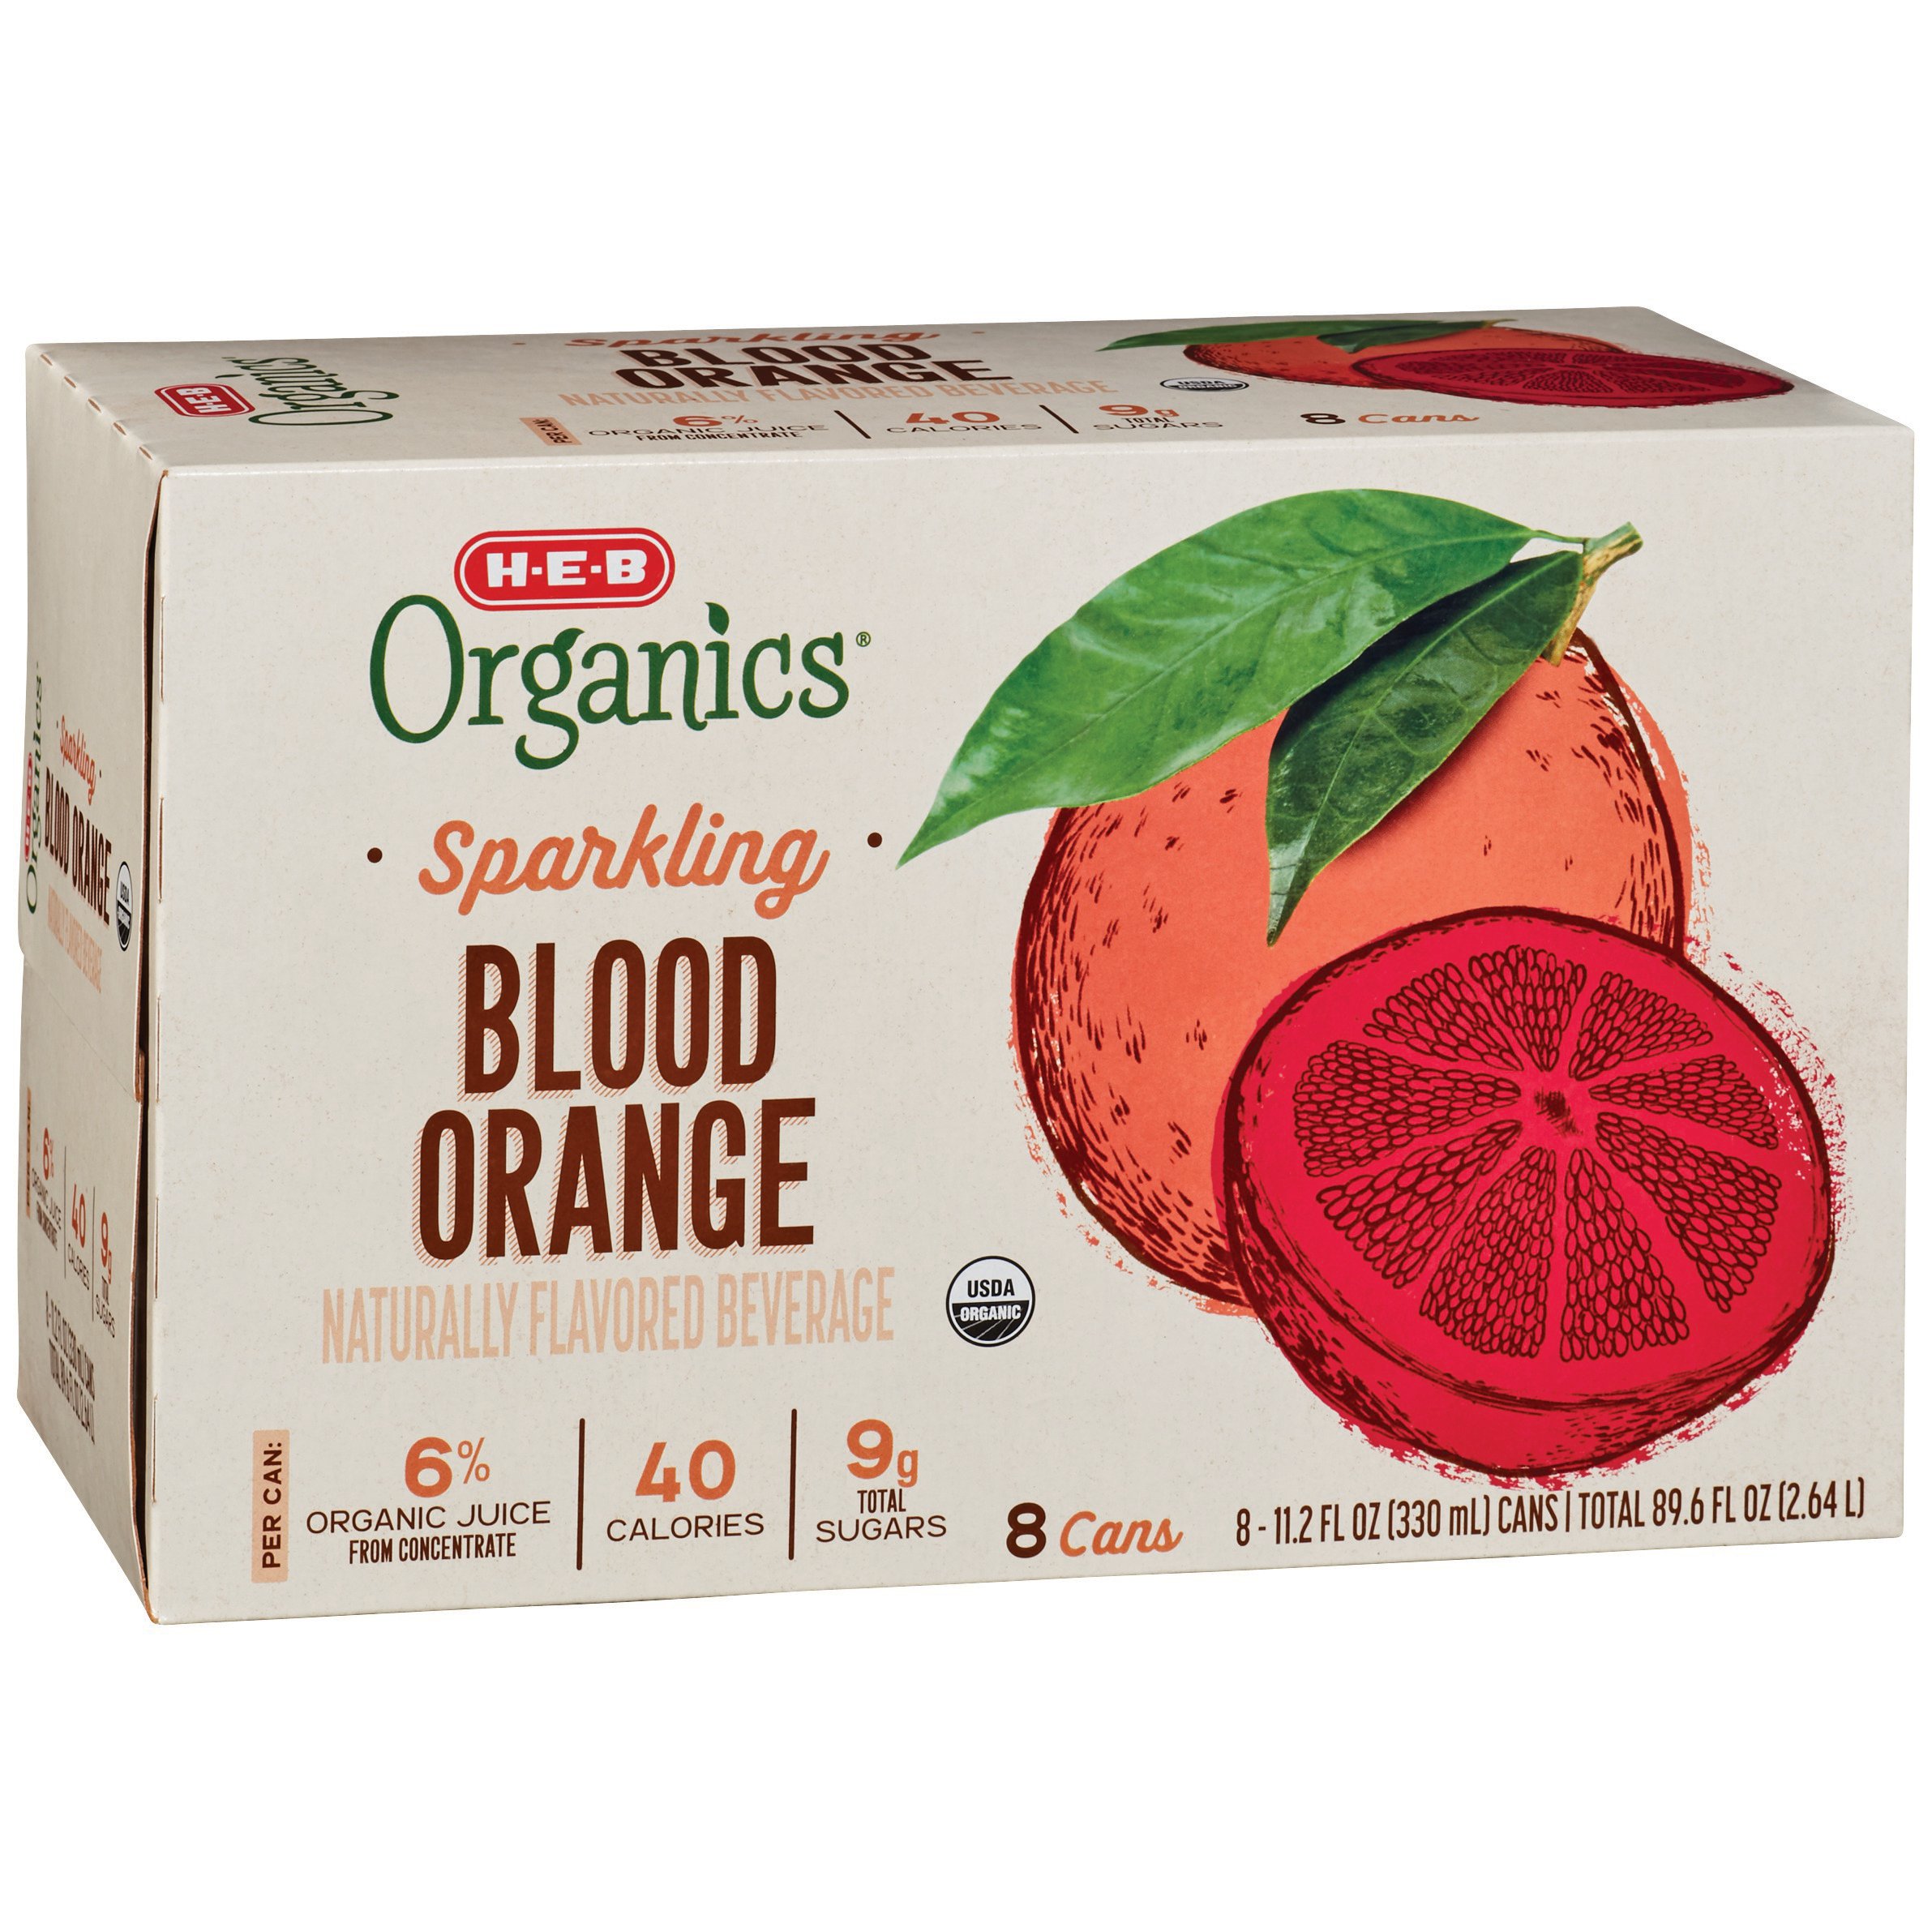 H-E-B Organics Sparkling Blood Orange Beverage 11.2 oz Cans - Shop Water at H-E-B